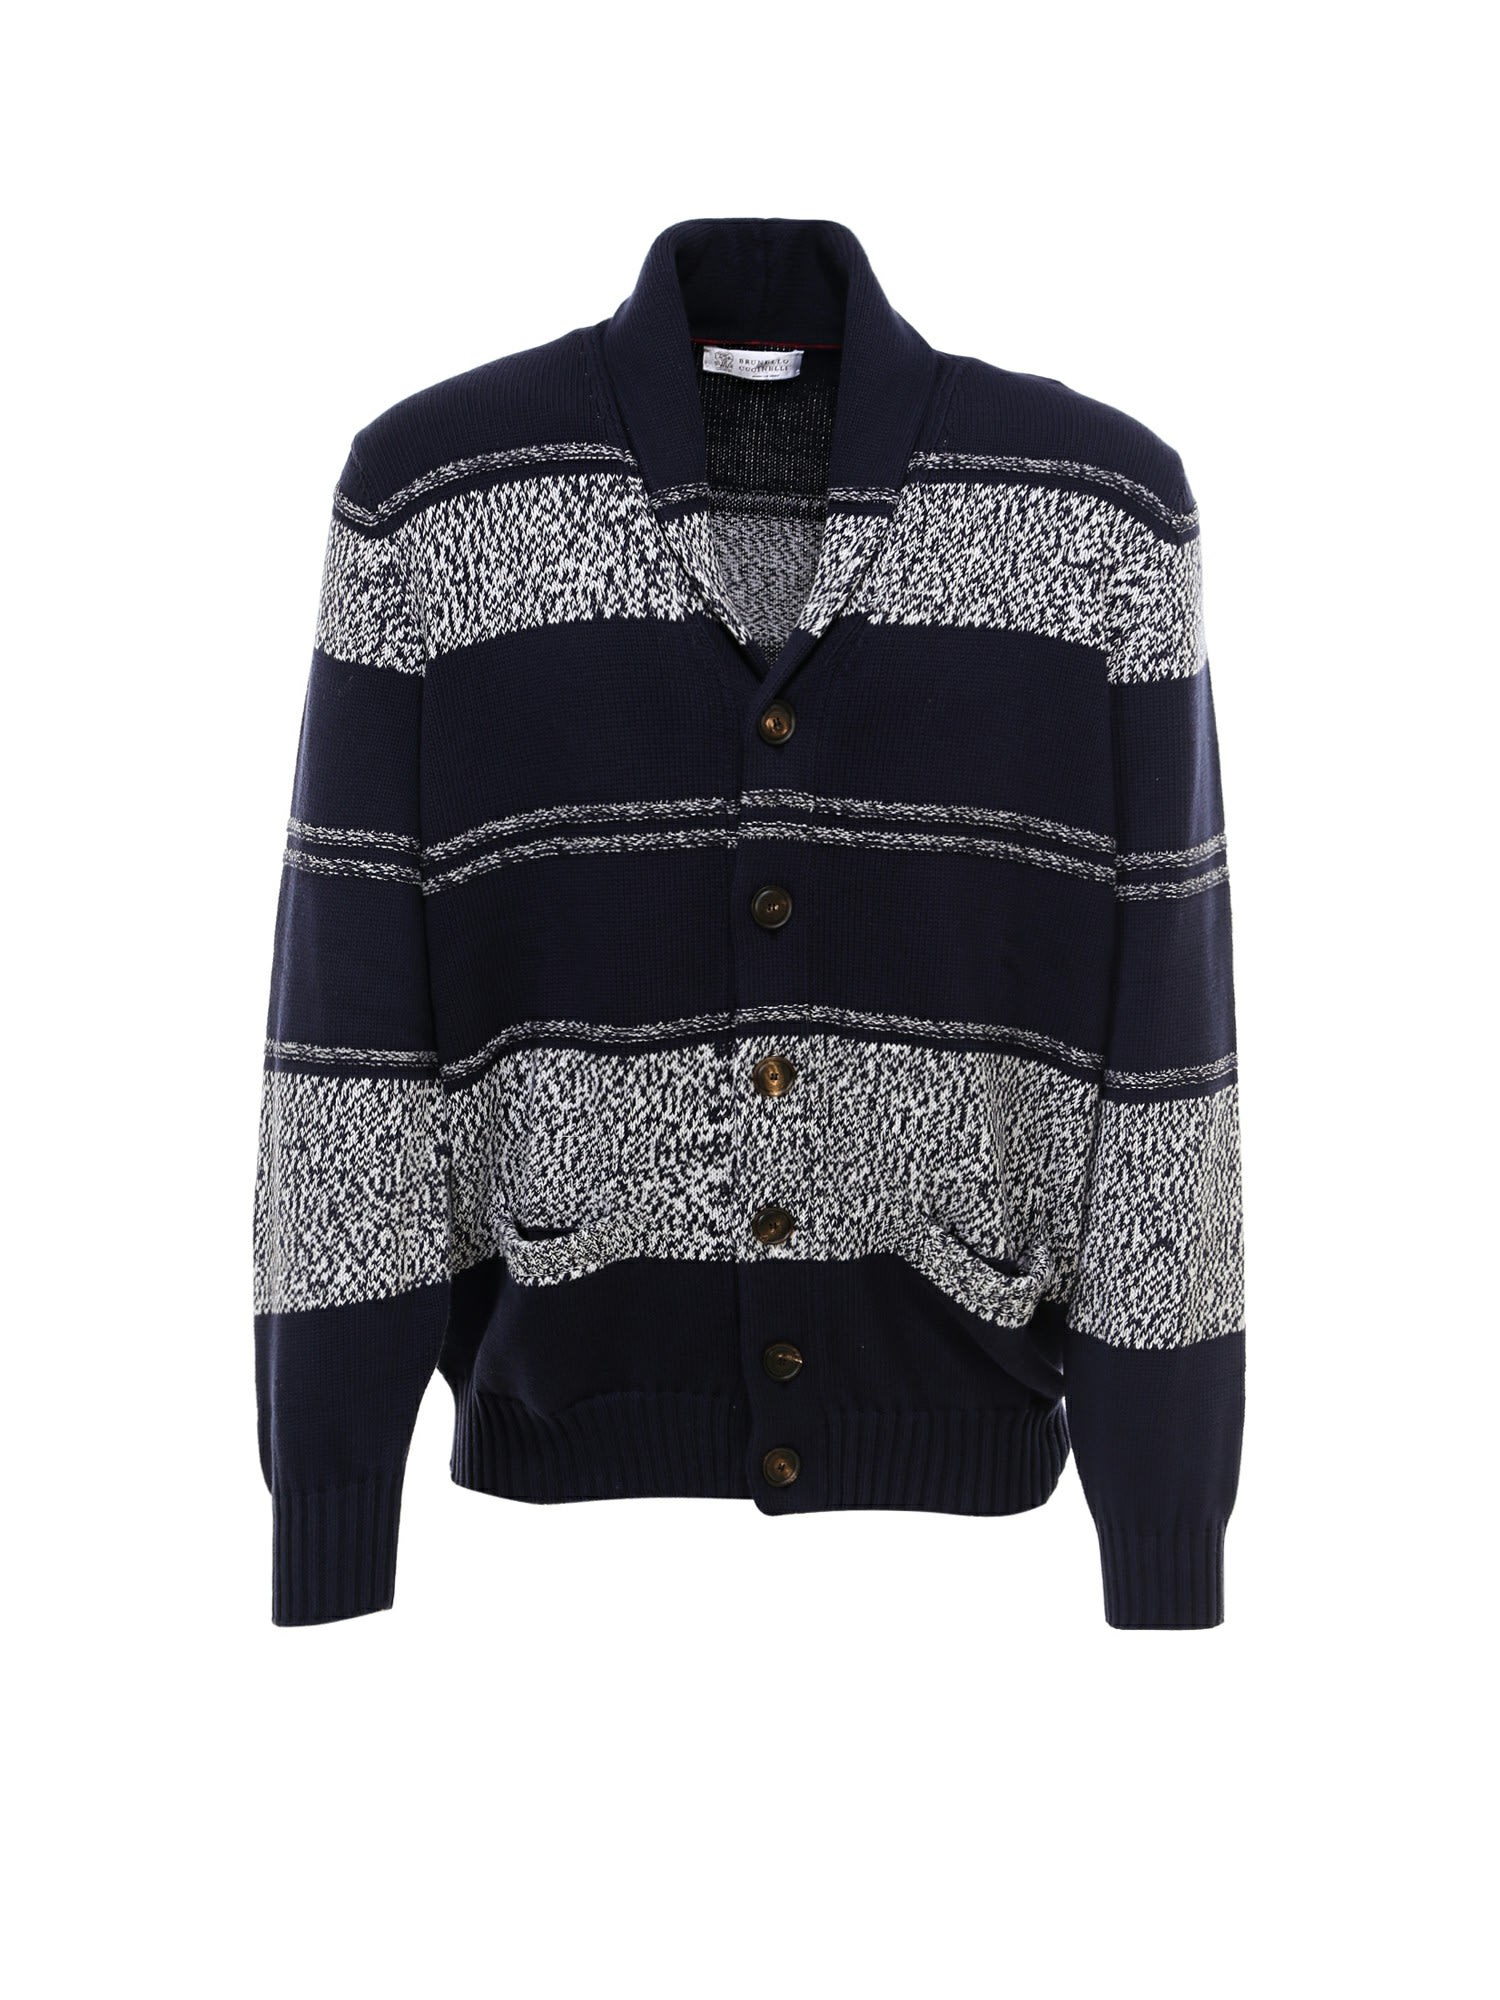 Brunello Cucinelli Sweaters Italist Always Like A Sale